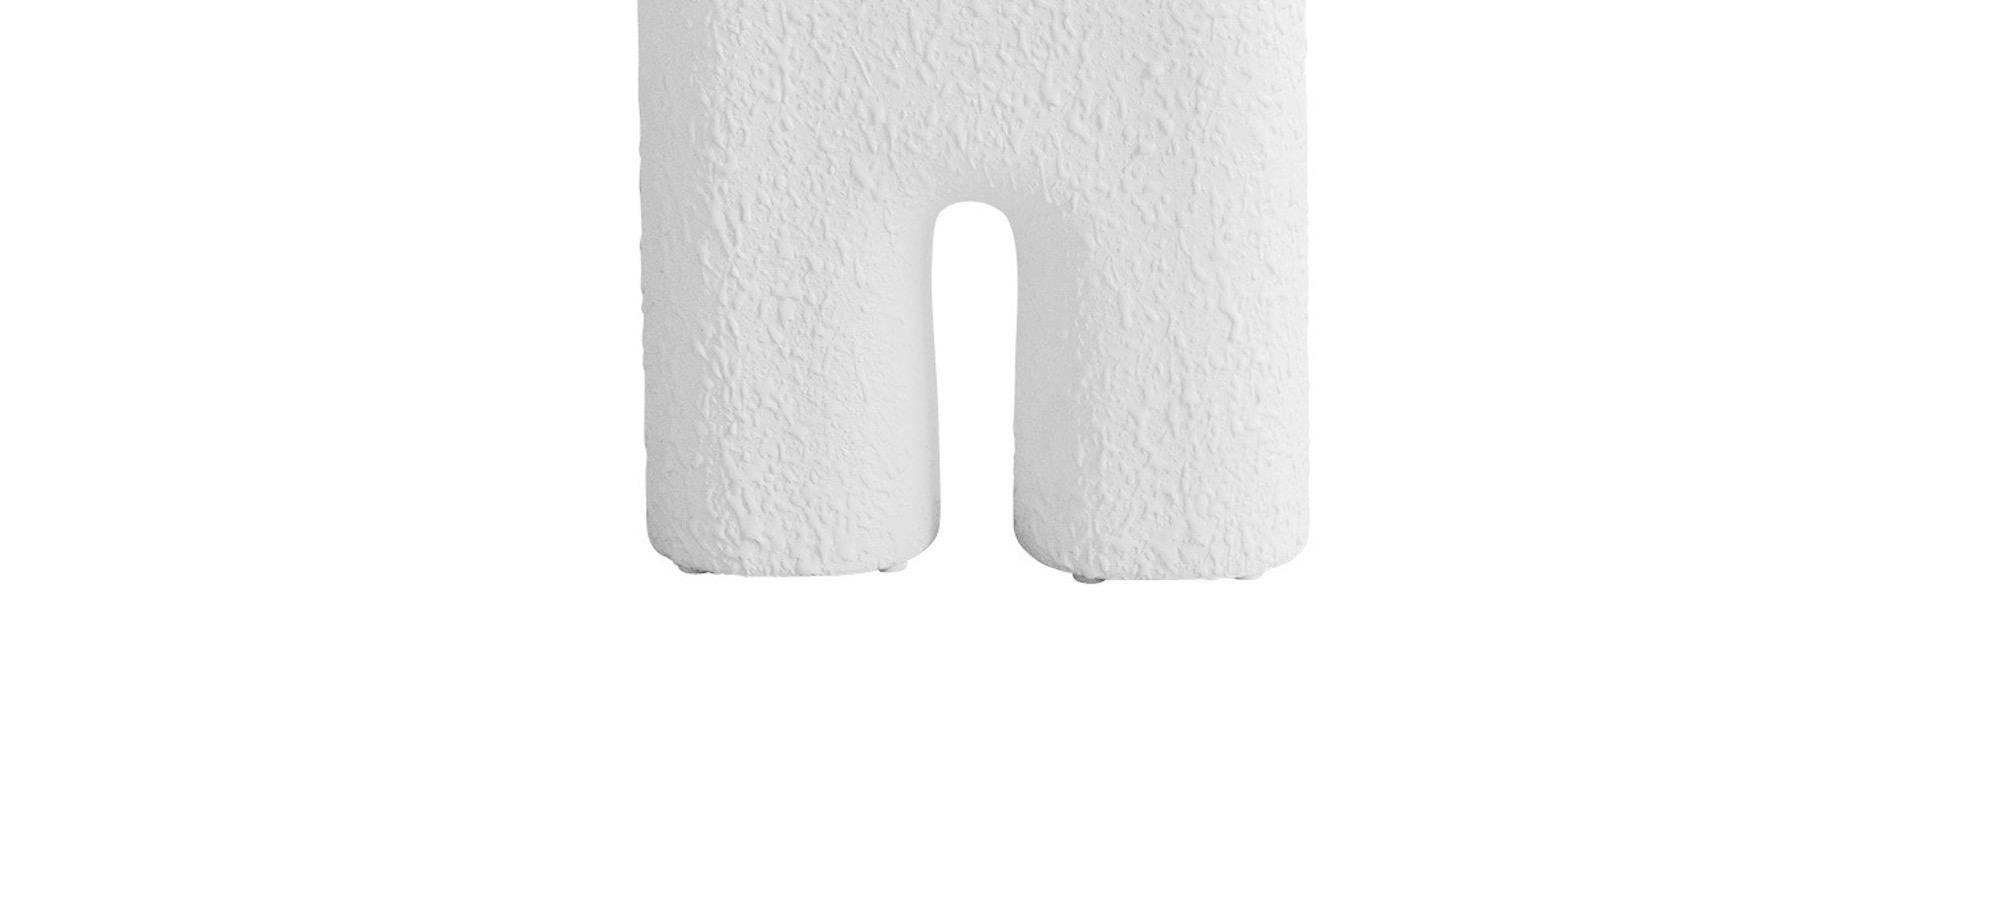 Chinese Textured White Center Spout Danish Design Vase, Denmark, Contemporary For Sale